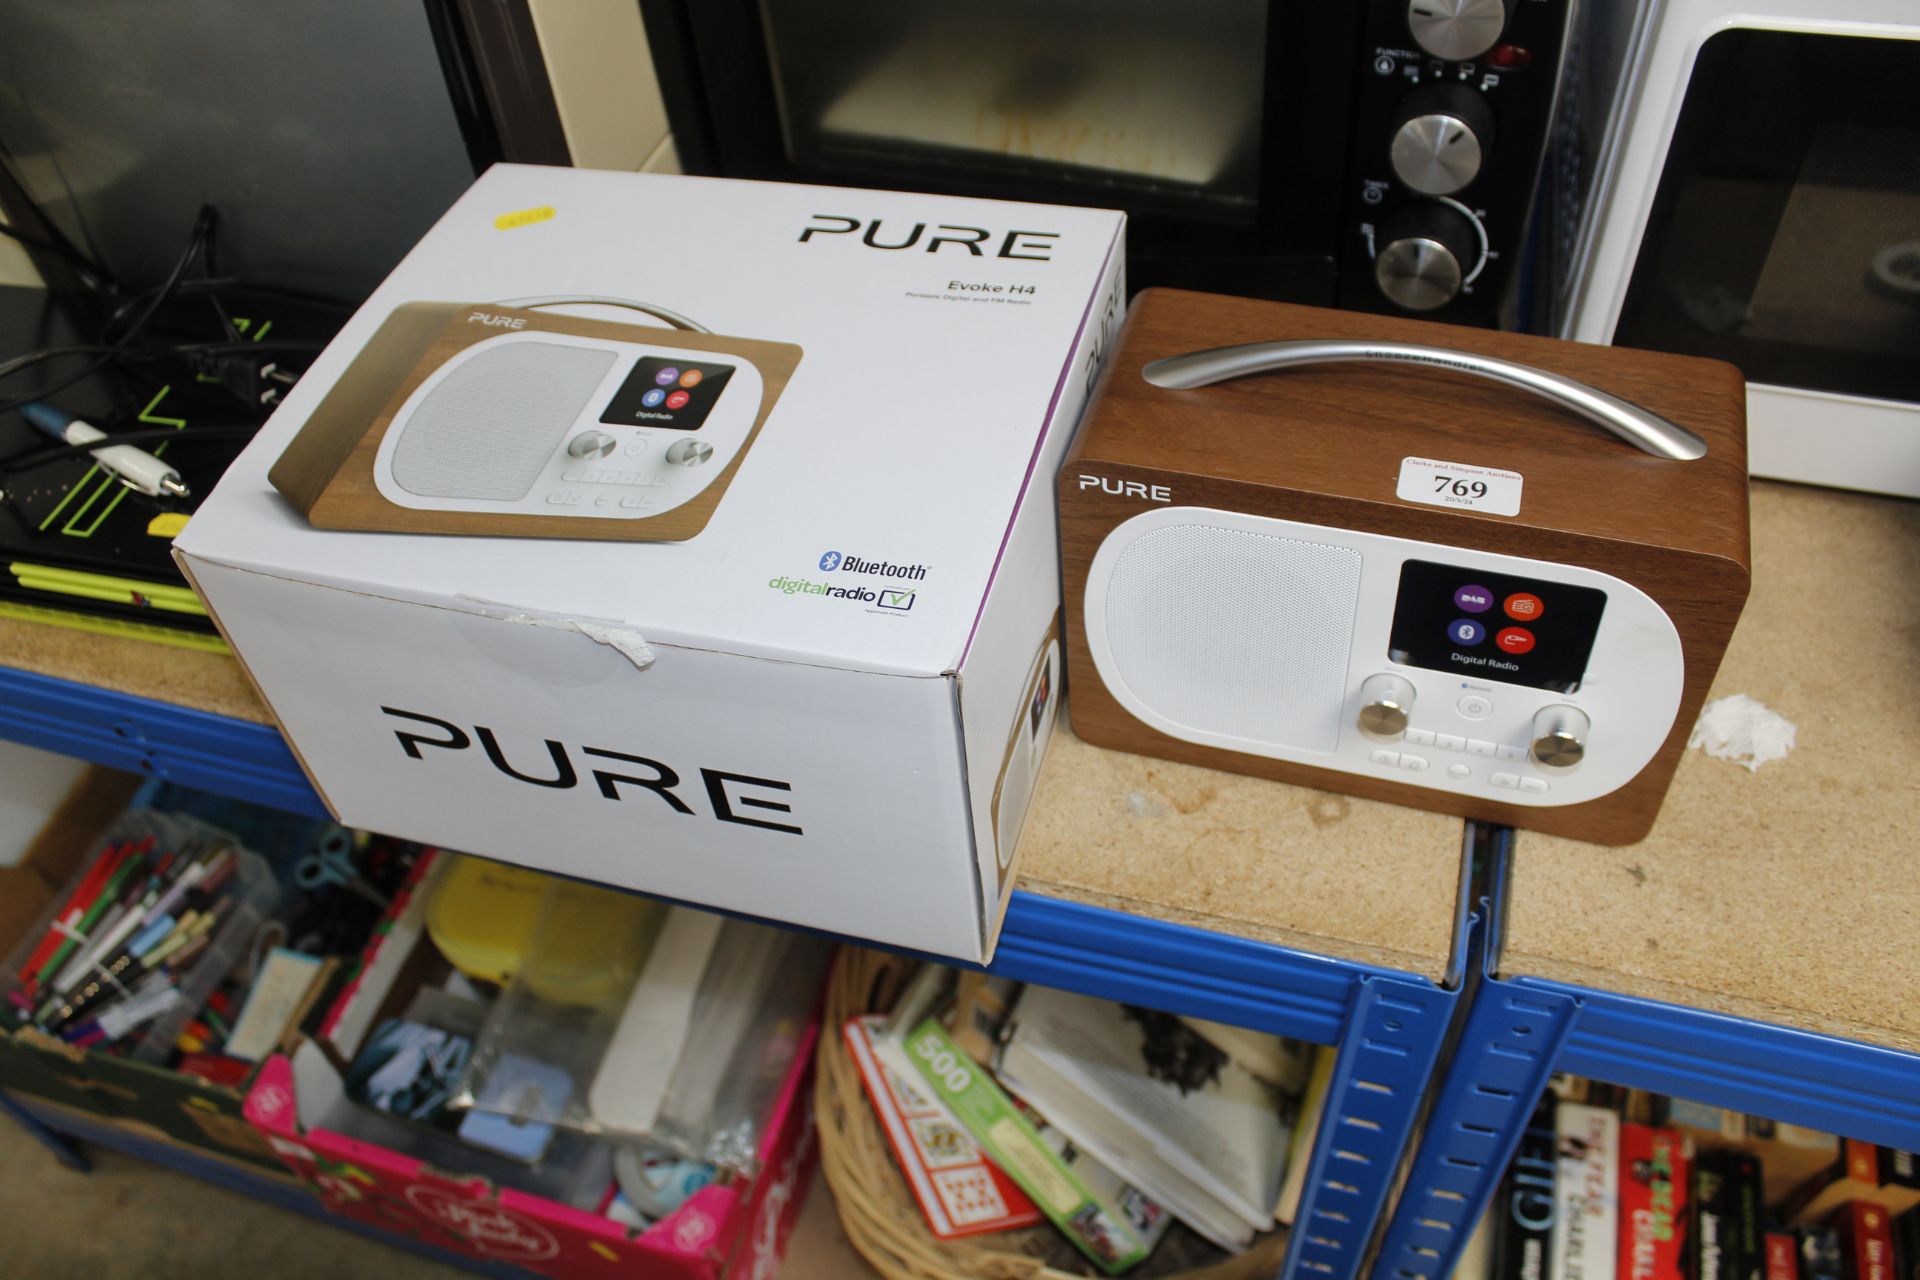 An as new Pure Evoke H4 portable digital radio